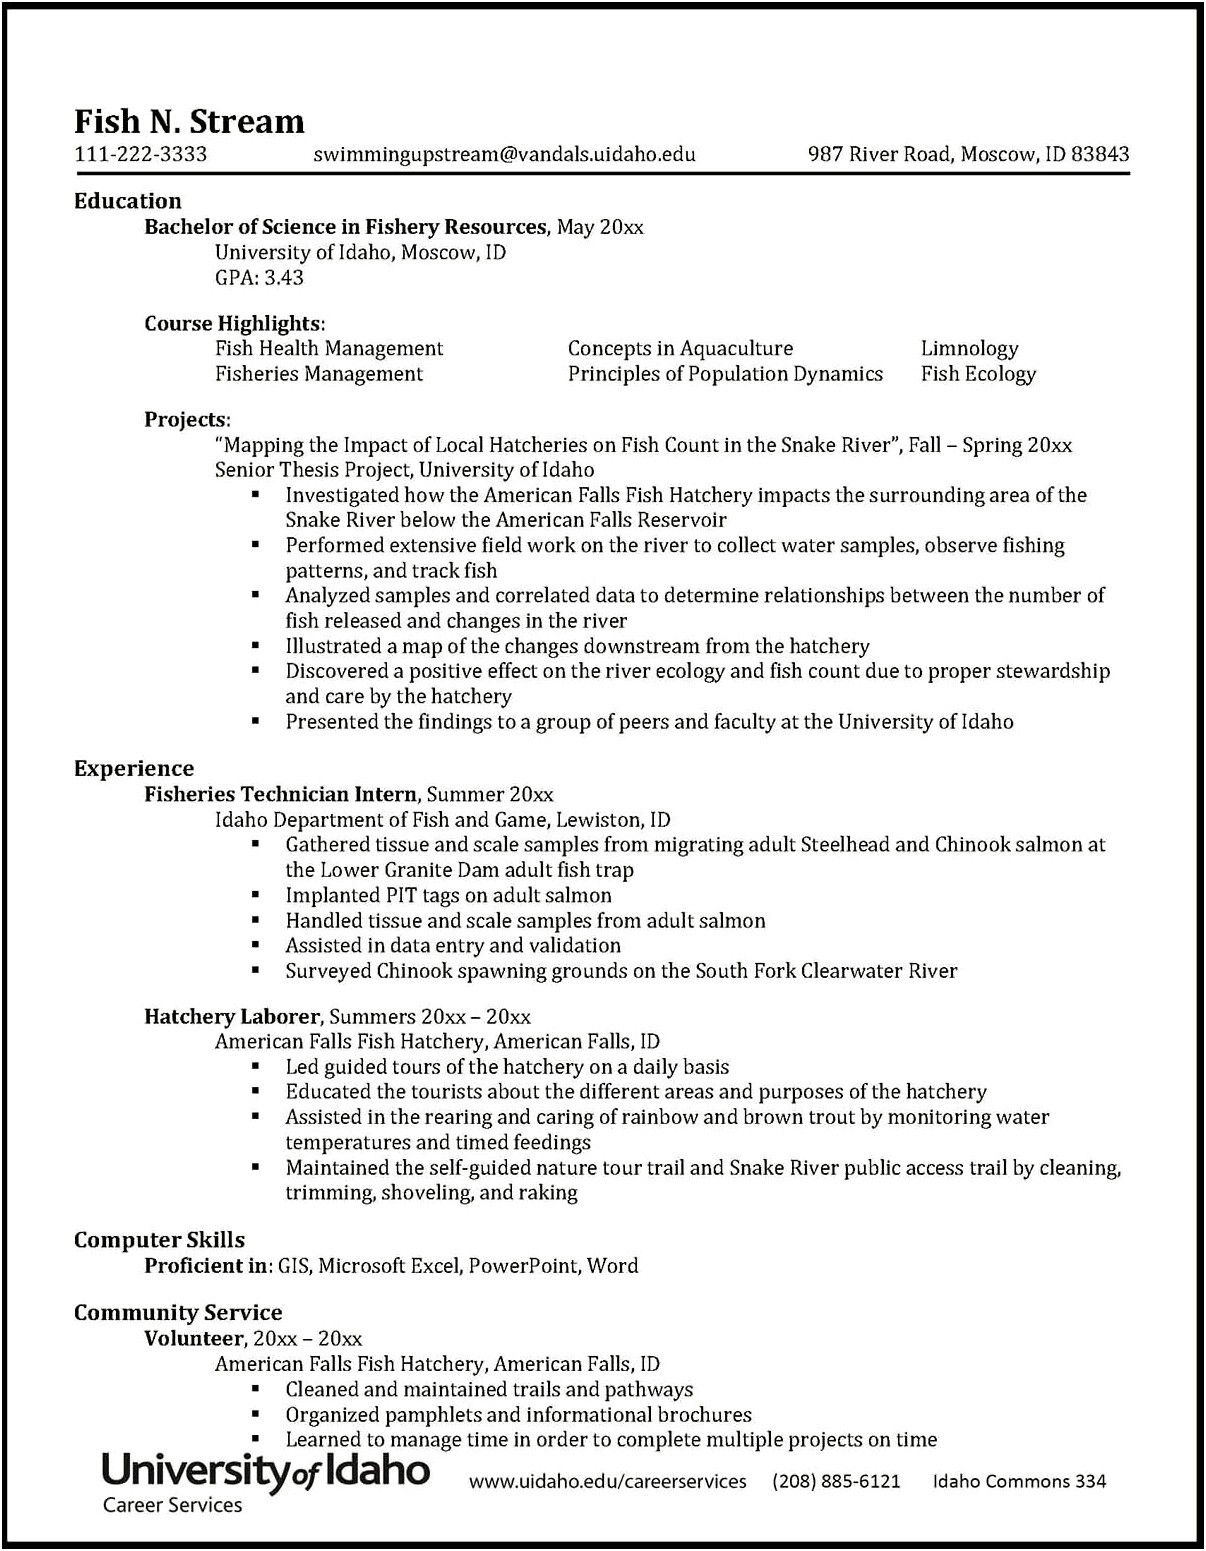 Computer Technician Job Description Resume Internship